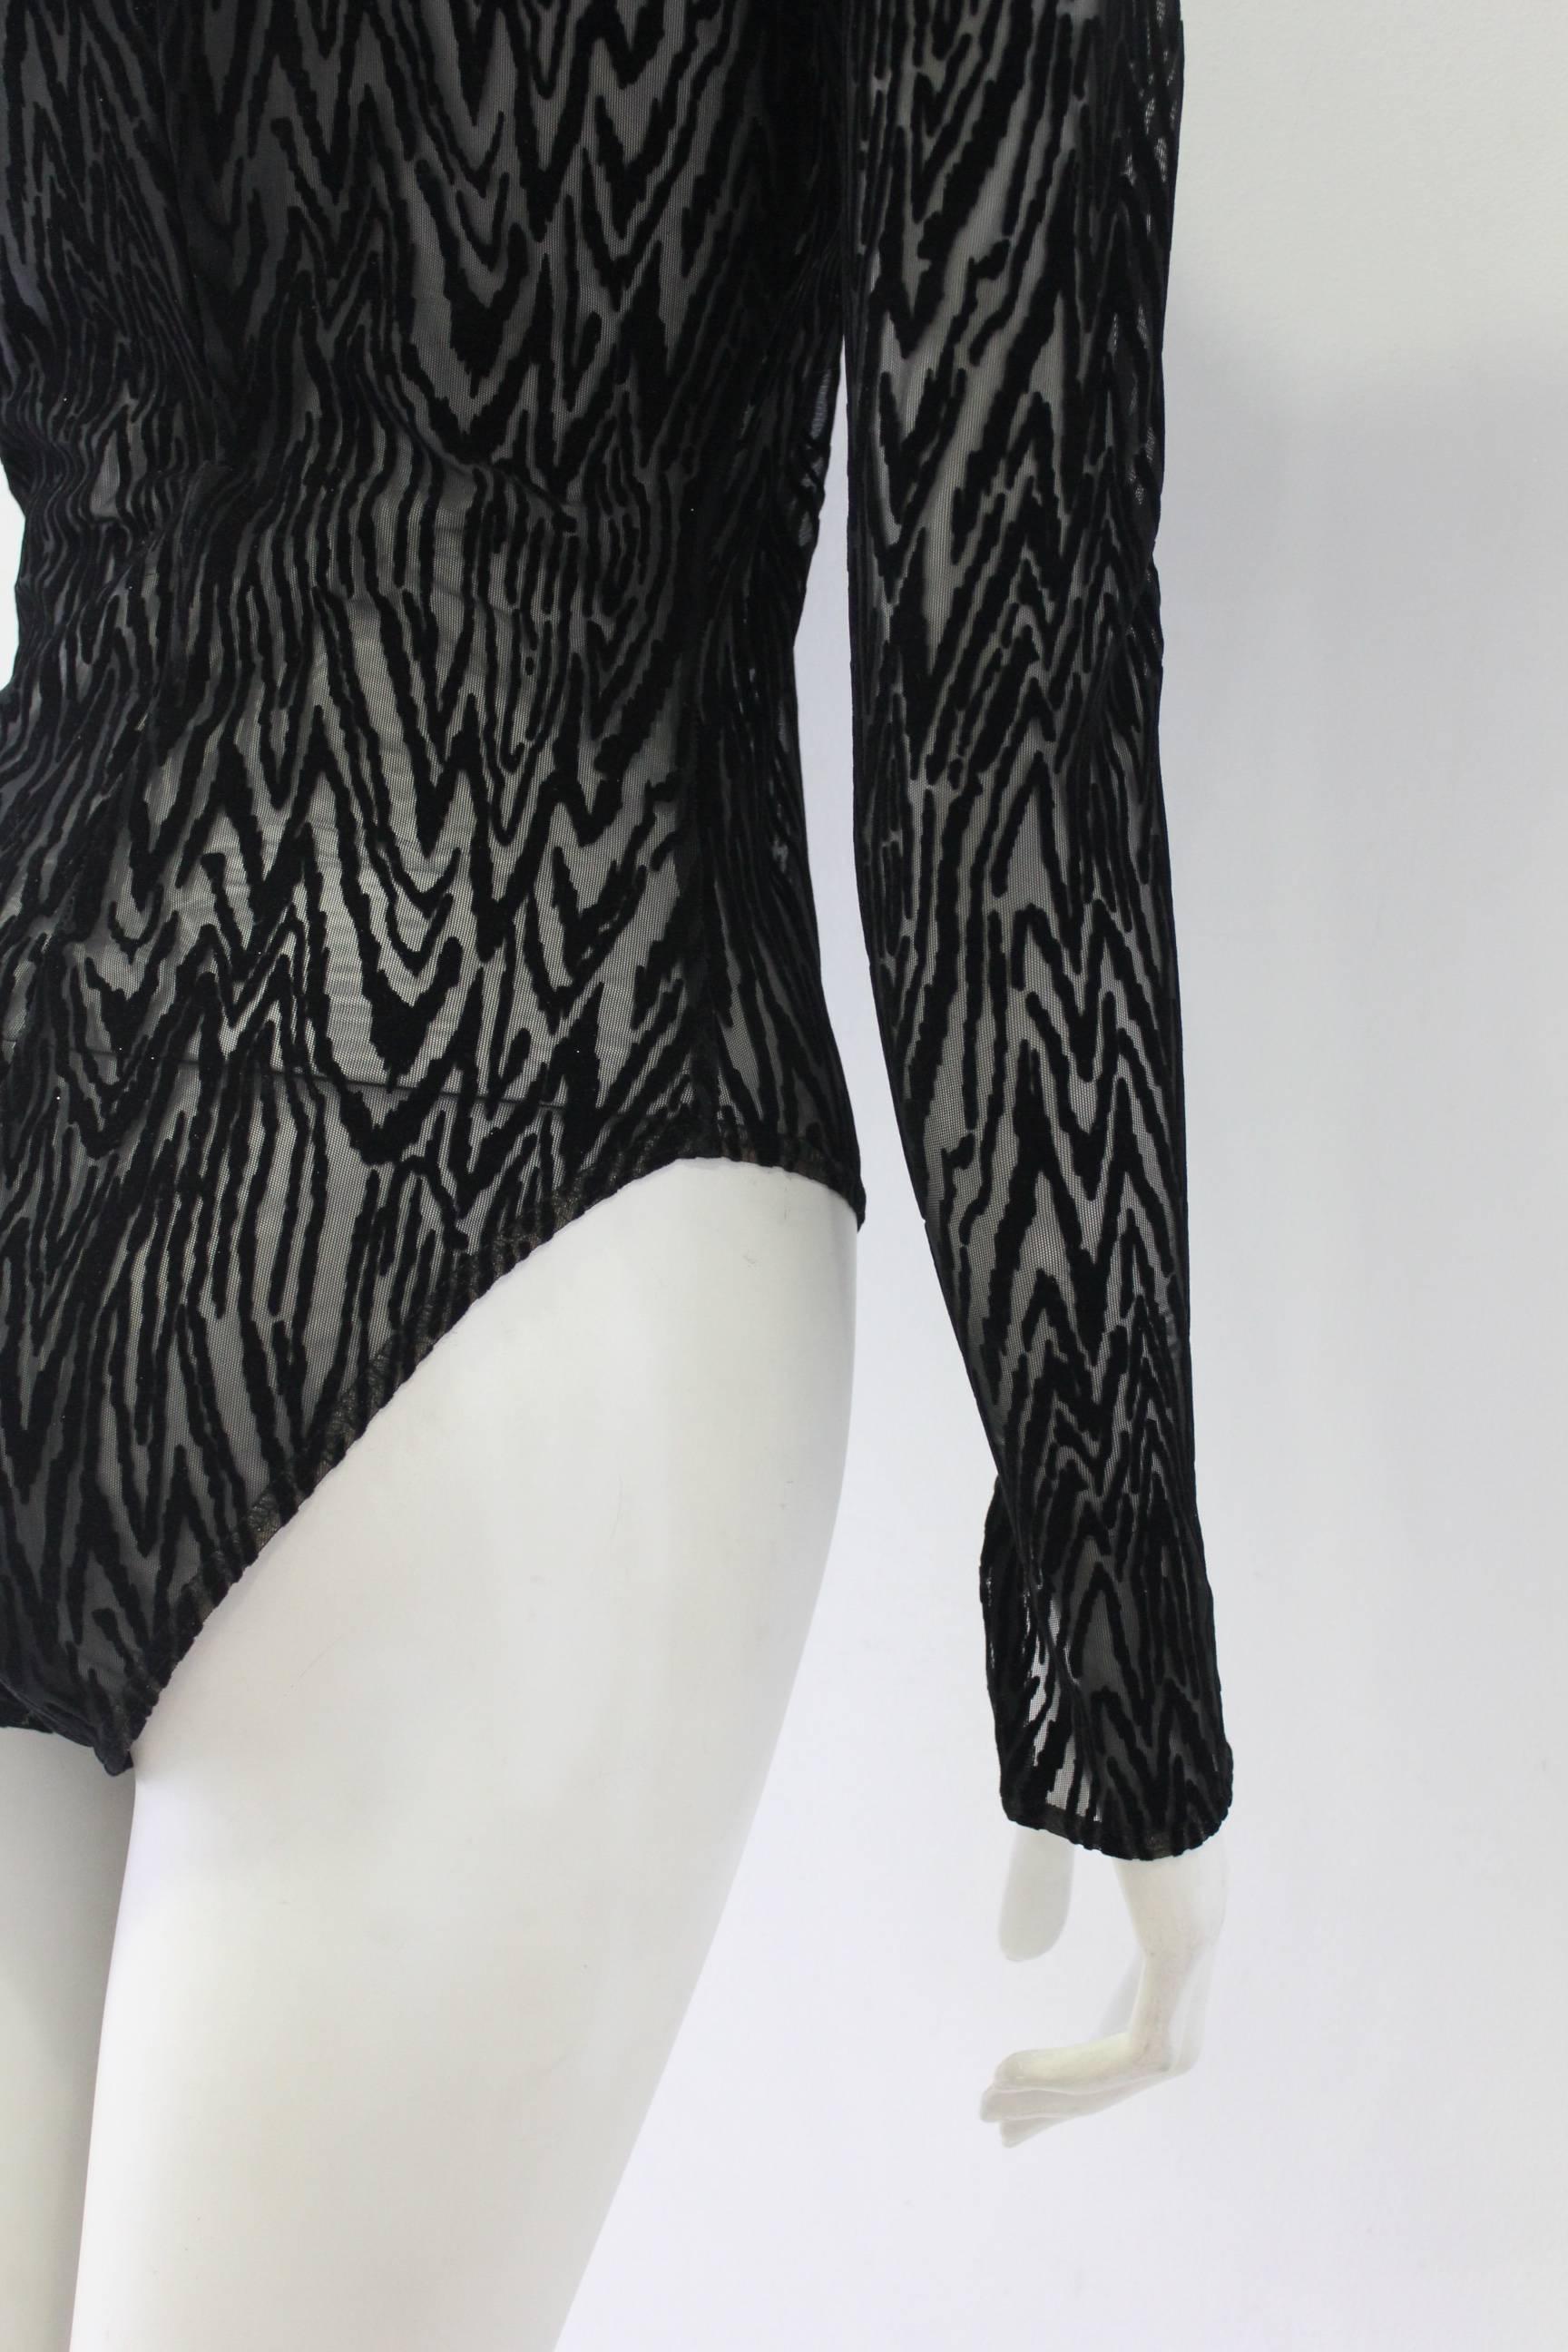 Women's Istante By Gianni Versace Sheer Velvet Sparkling Body For Sale